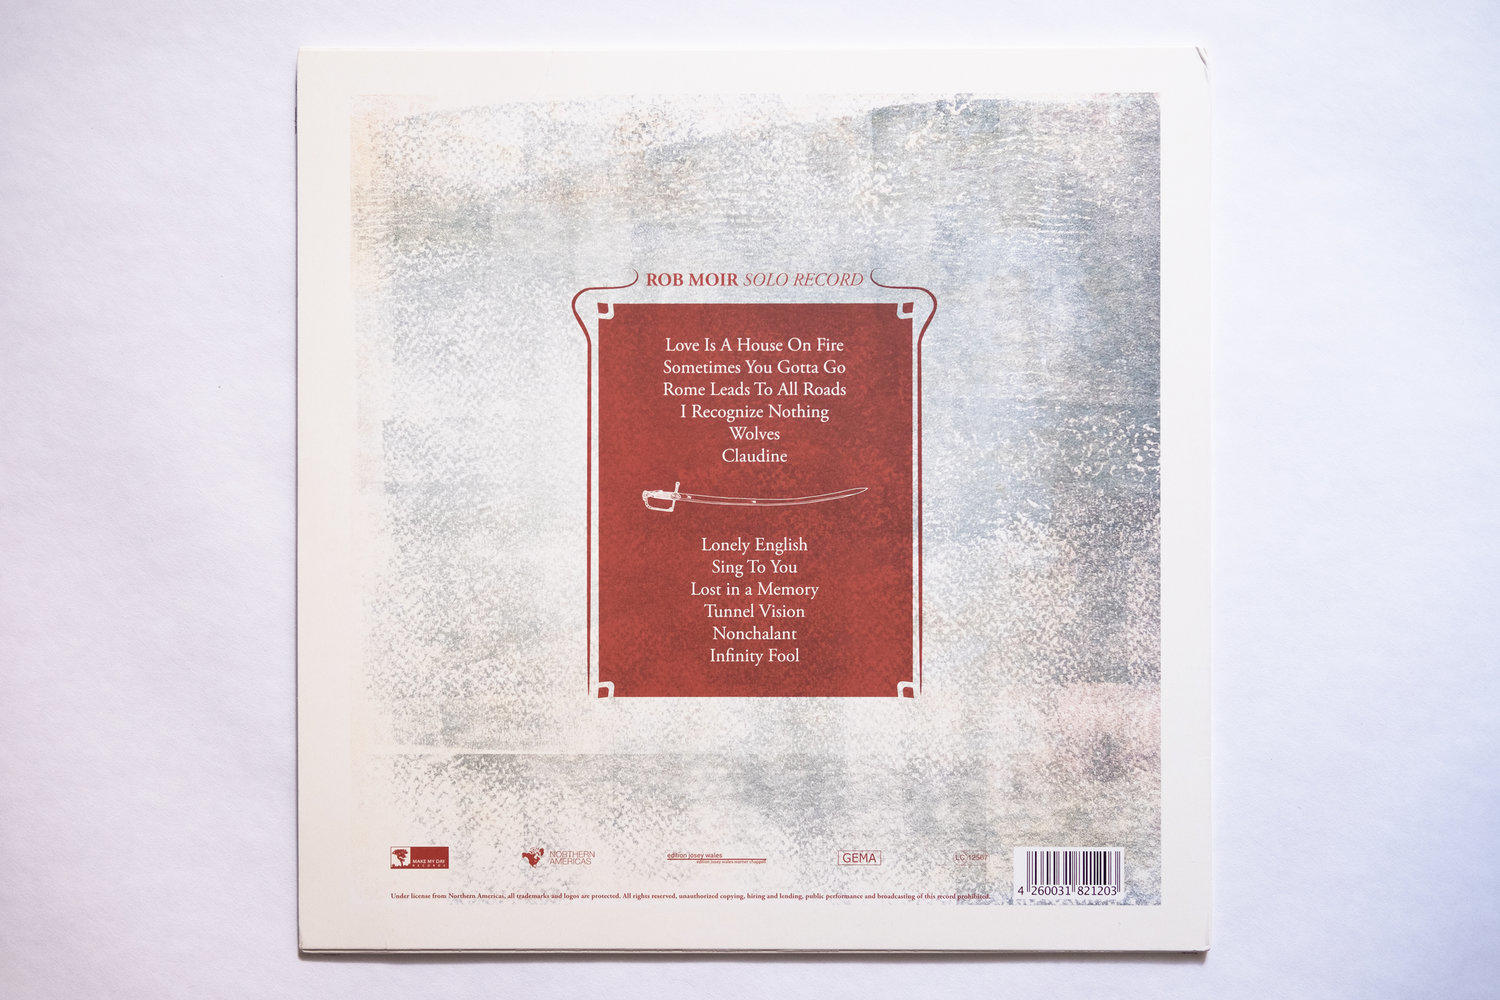 Rob Moir - Solo Record - Bonus-CD) (LP 